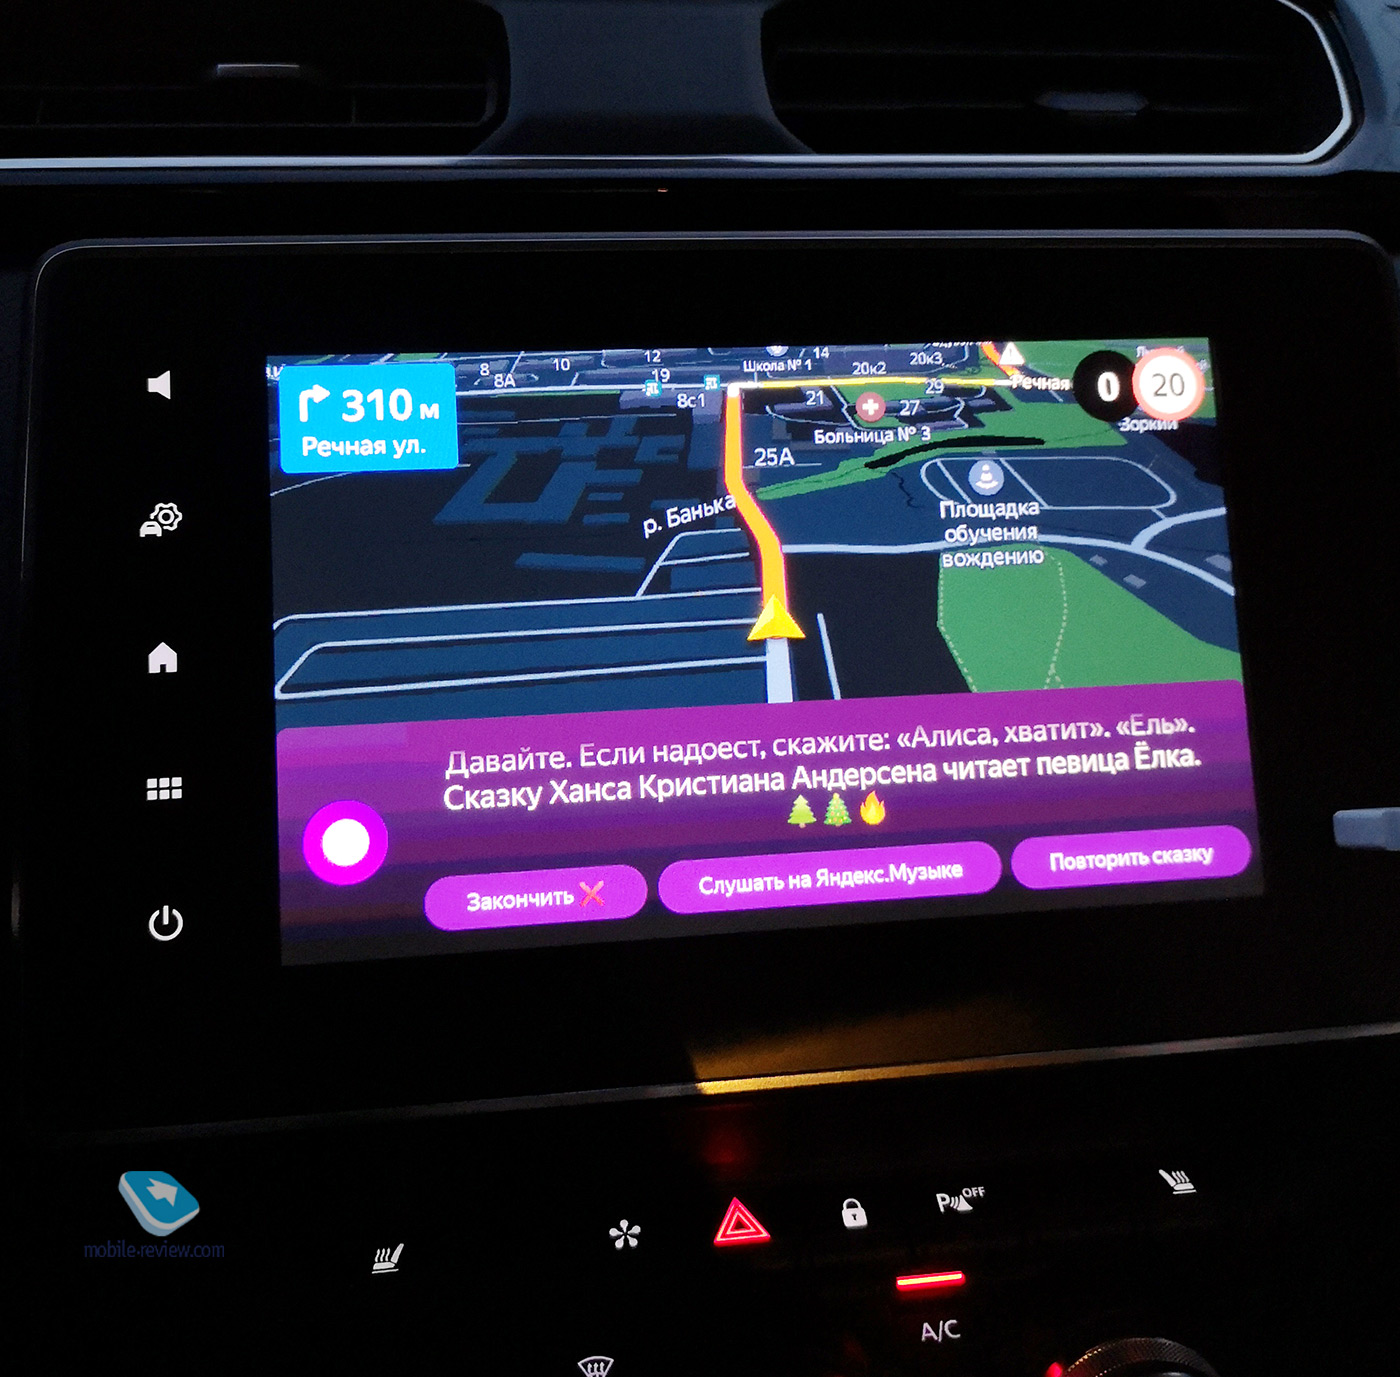   21.  Android Auto  Apple CarPlay  